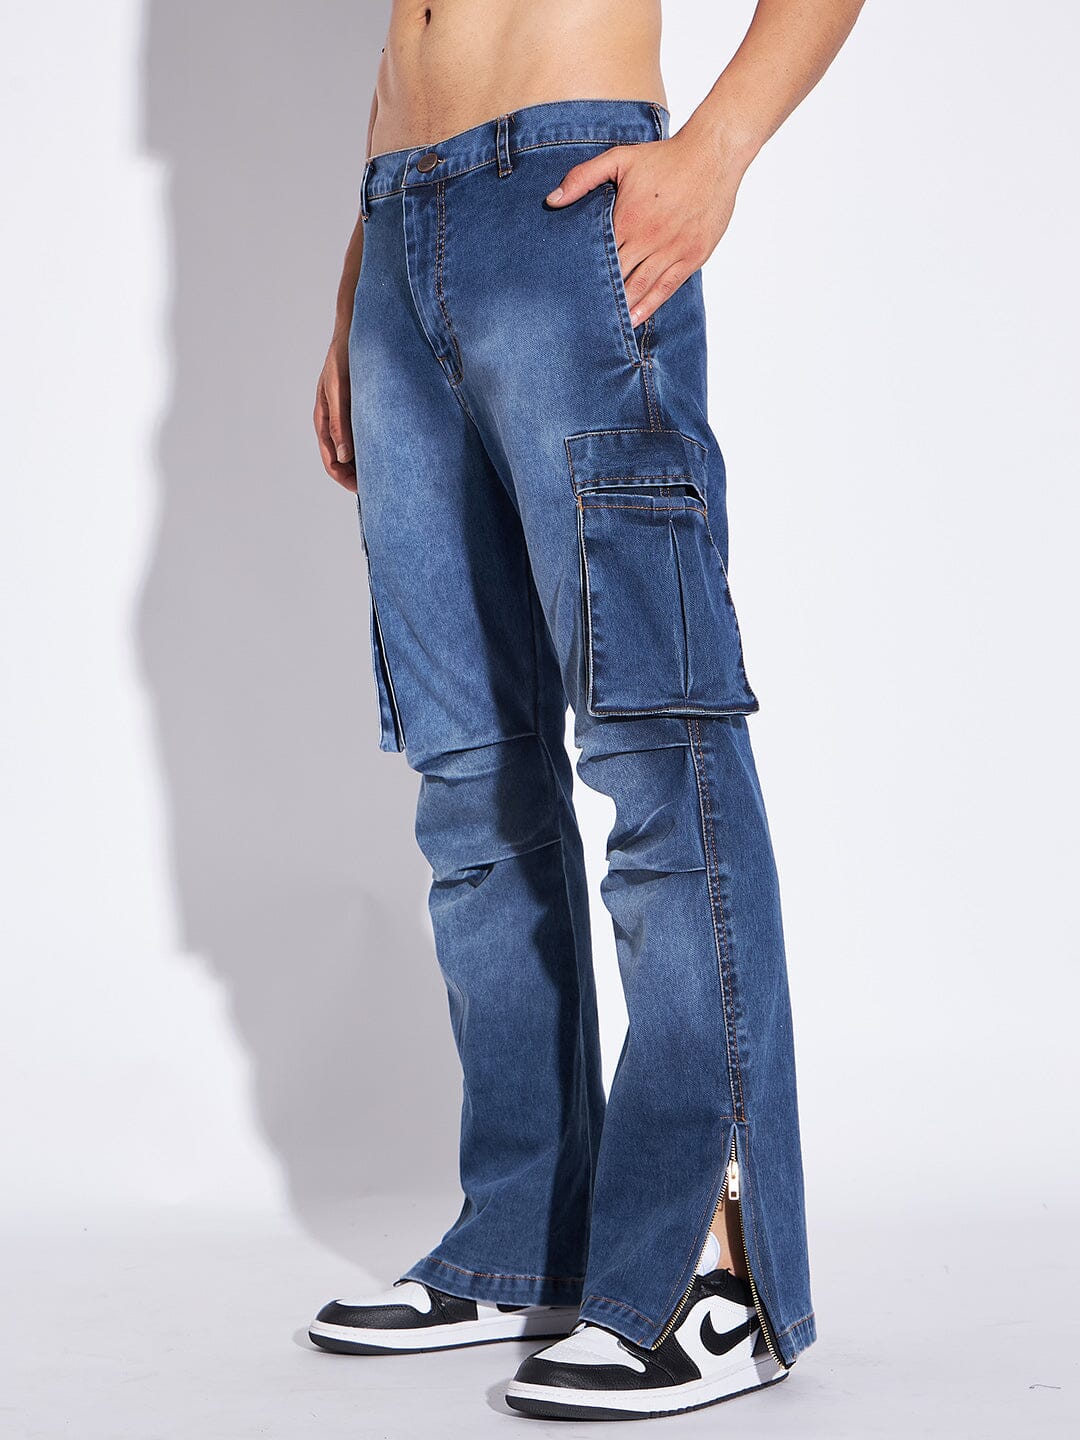 Set of Jeans cargo Denim pants technical fashion illustration with low  waist, rise, pockets, belt loops, full lengths. Flat bottom apparel front  back, grey color style. Women, men, unisex CAD mockup Stock